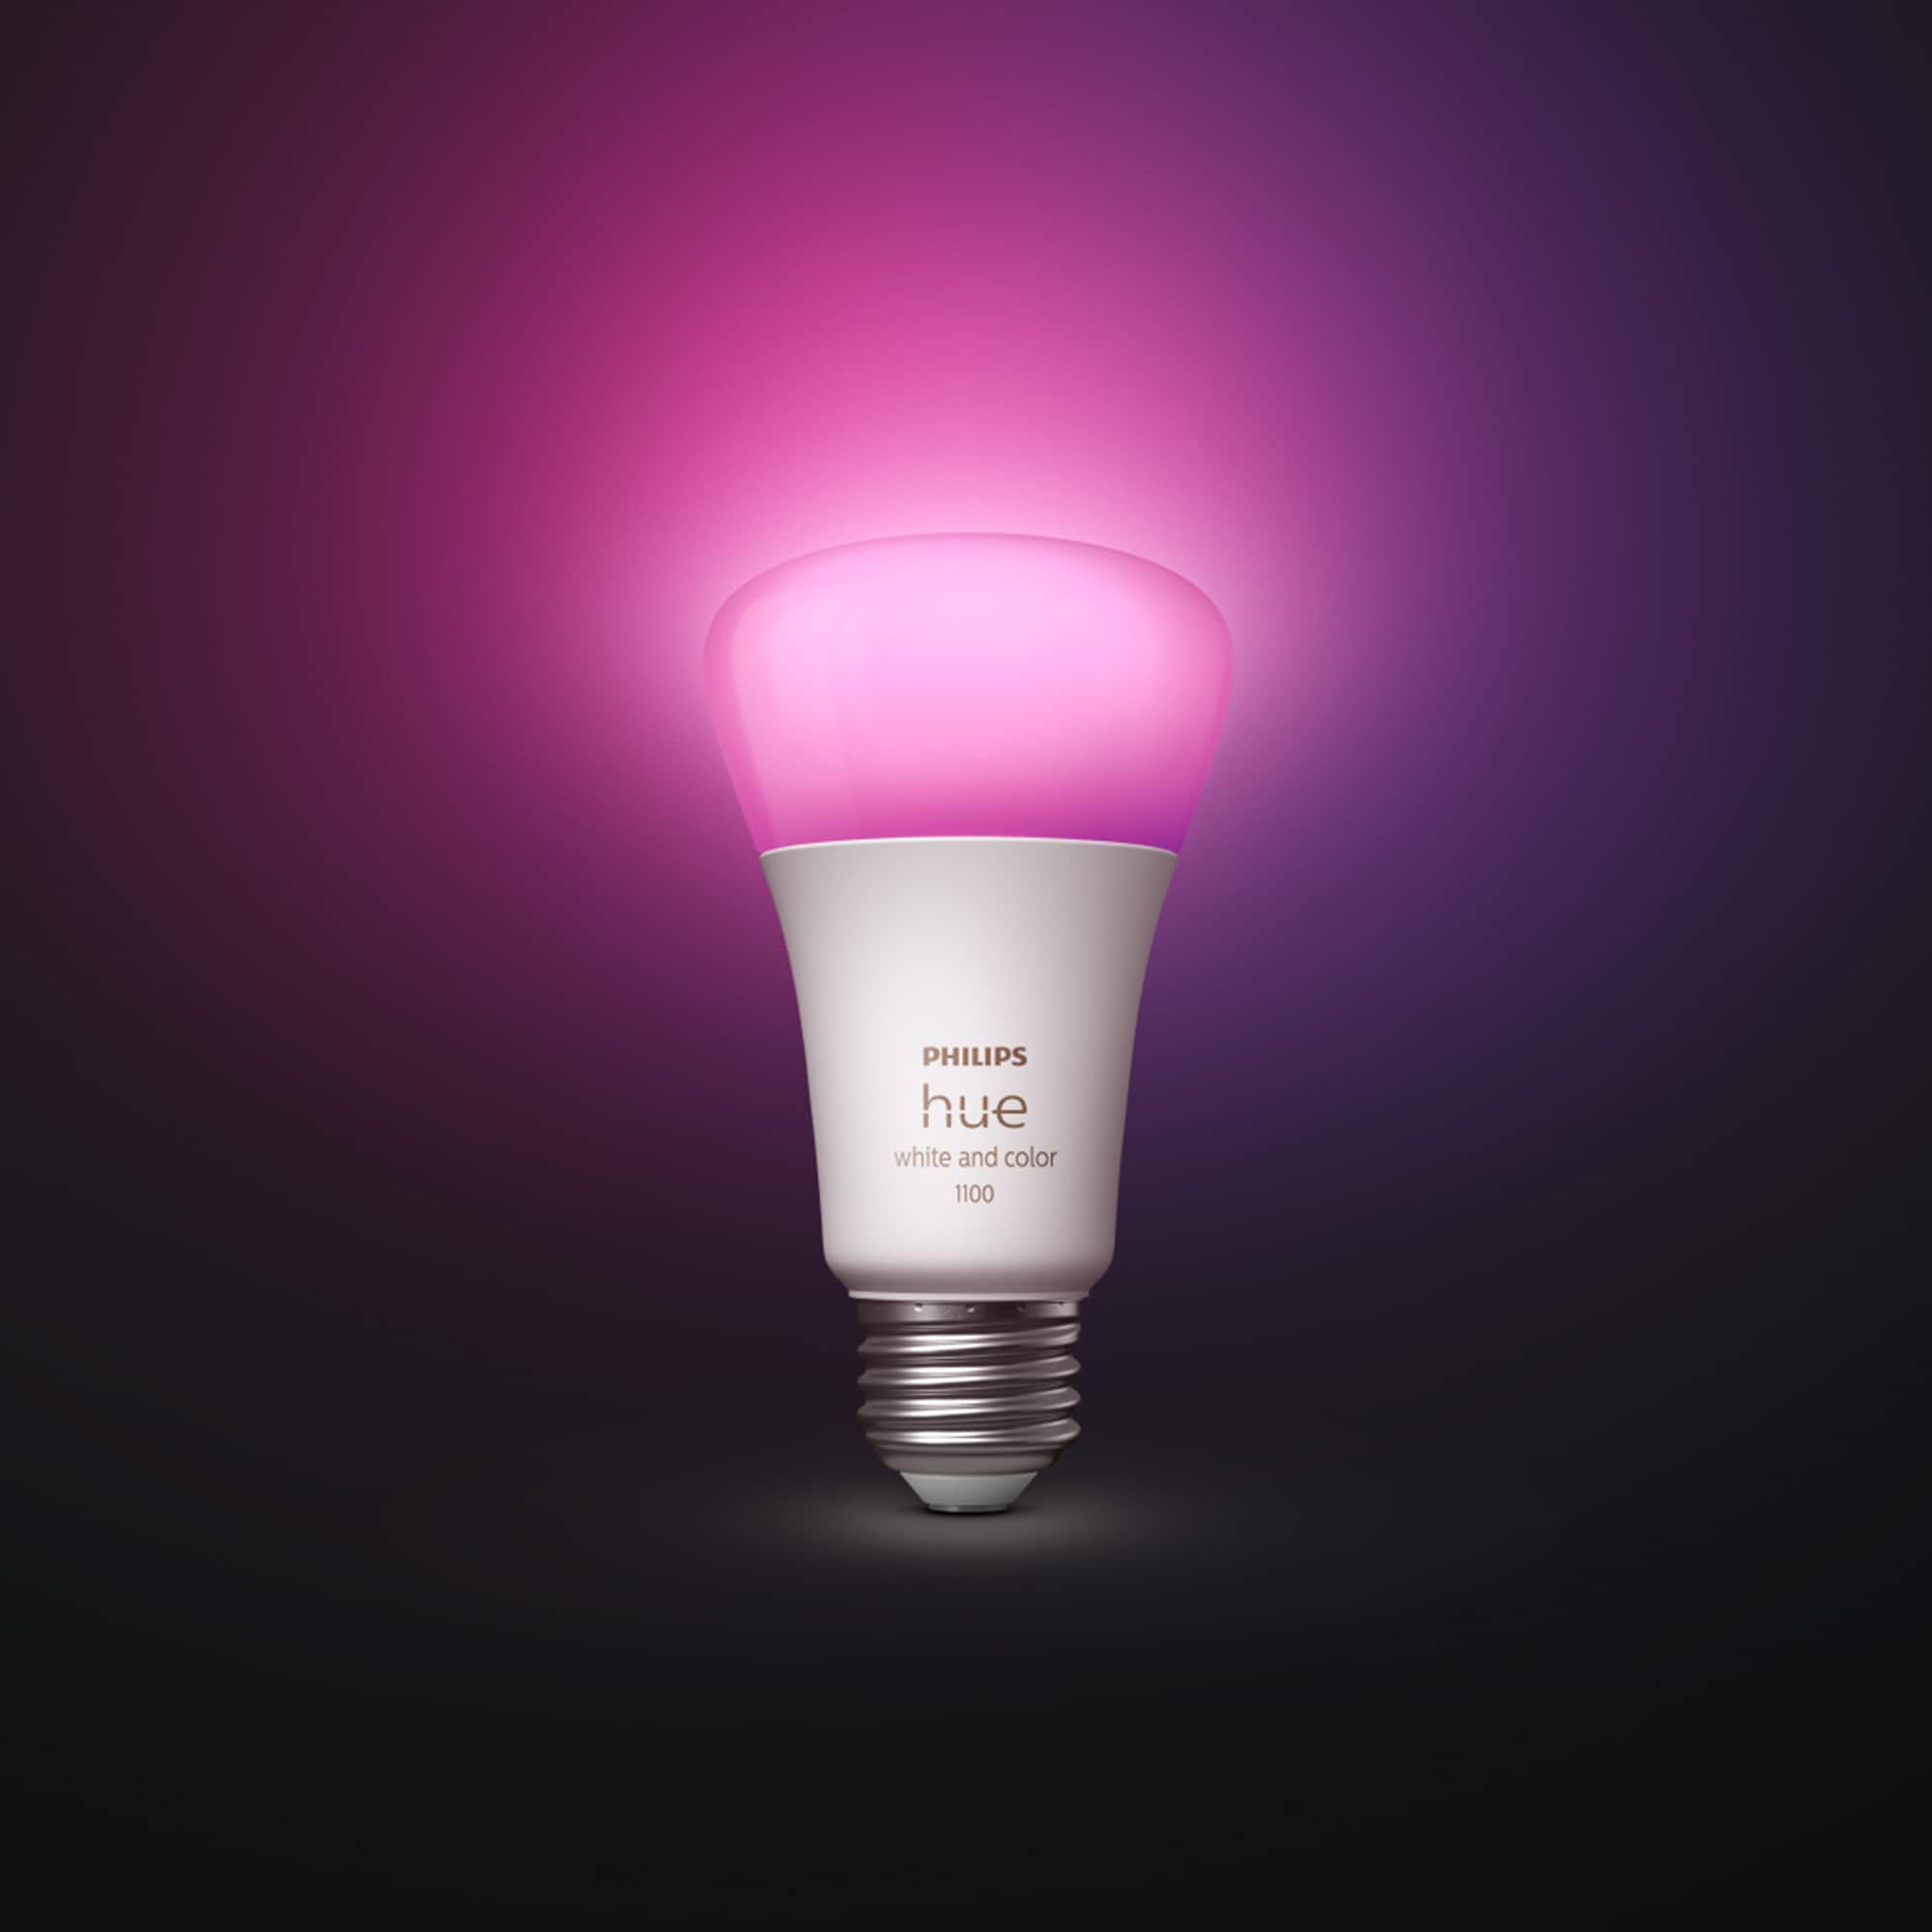 Philips Hue Starter Kit 75-Watt EQ A19 Color-changing E26 Dimmable Smart  LED Light Bulb (4-Pack)